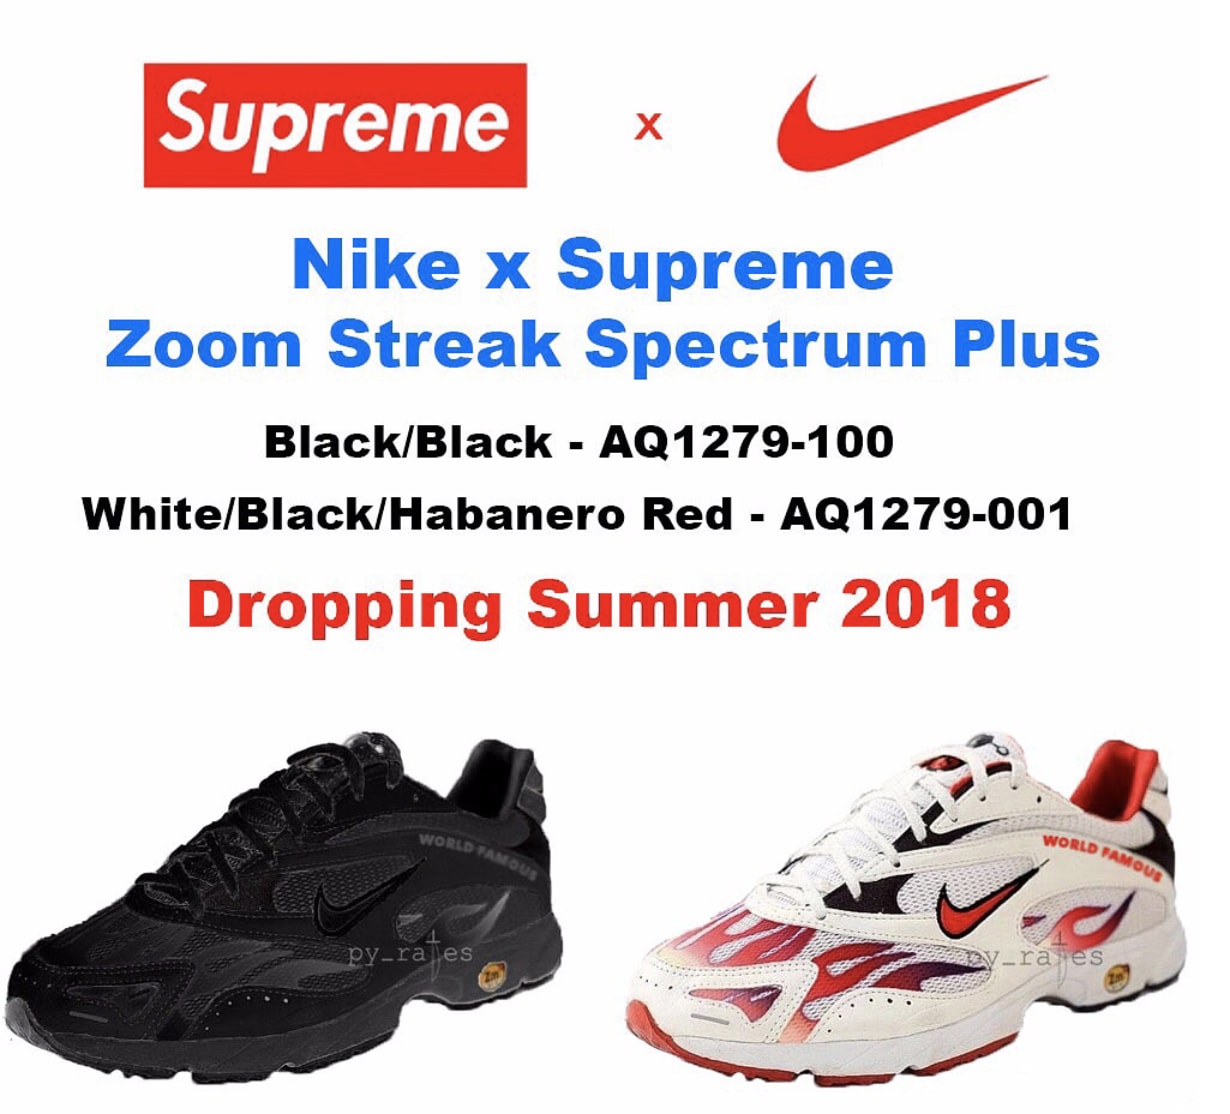 Supreme x Nike Zoom Streak Spectrum Plus